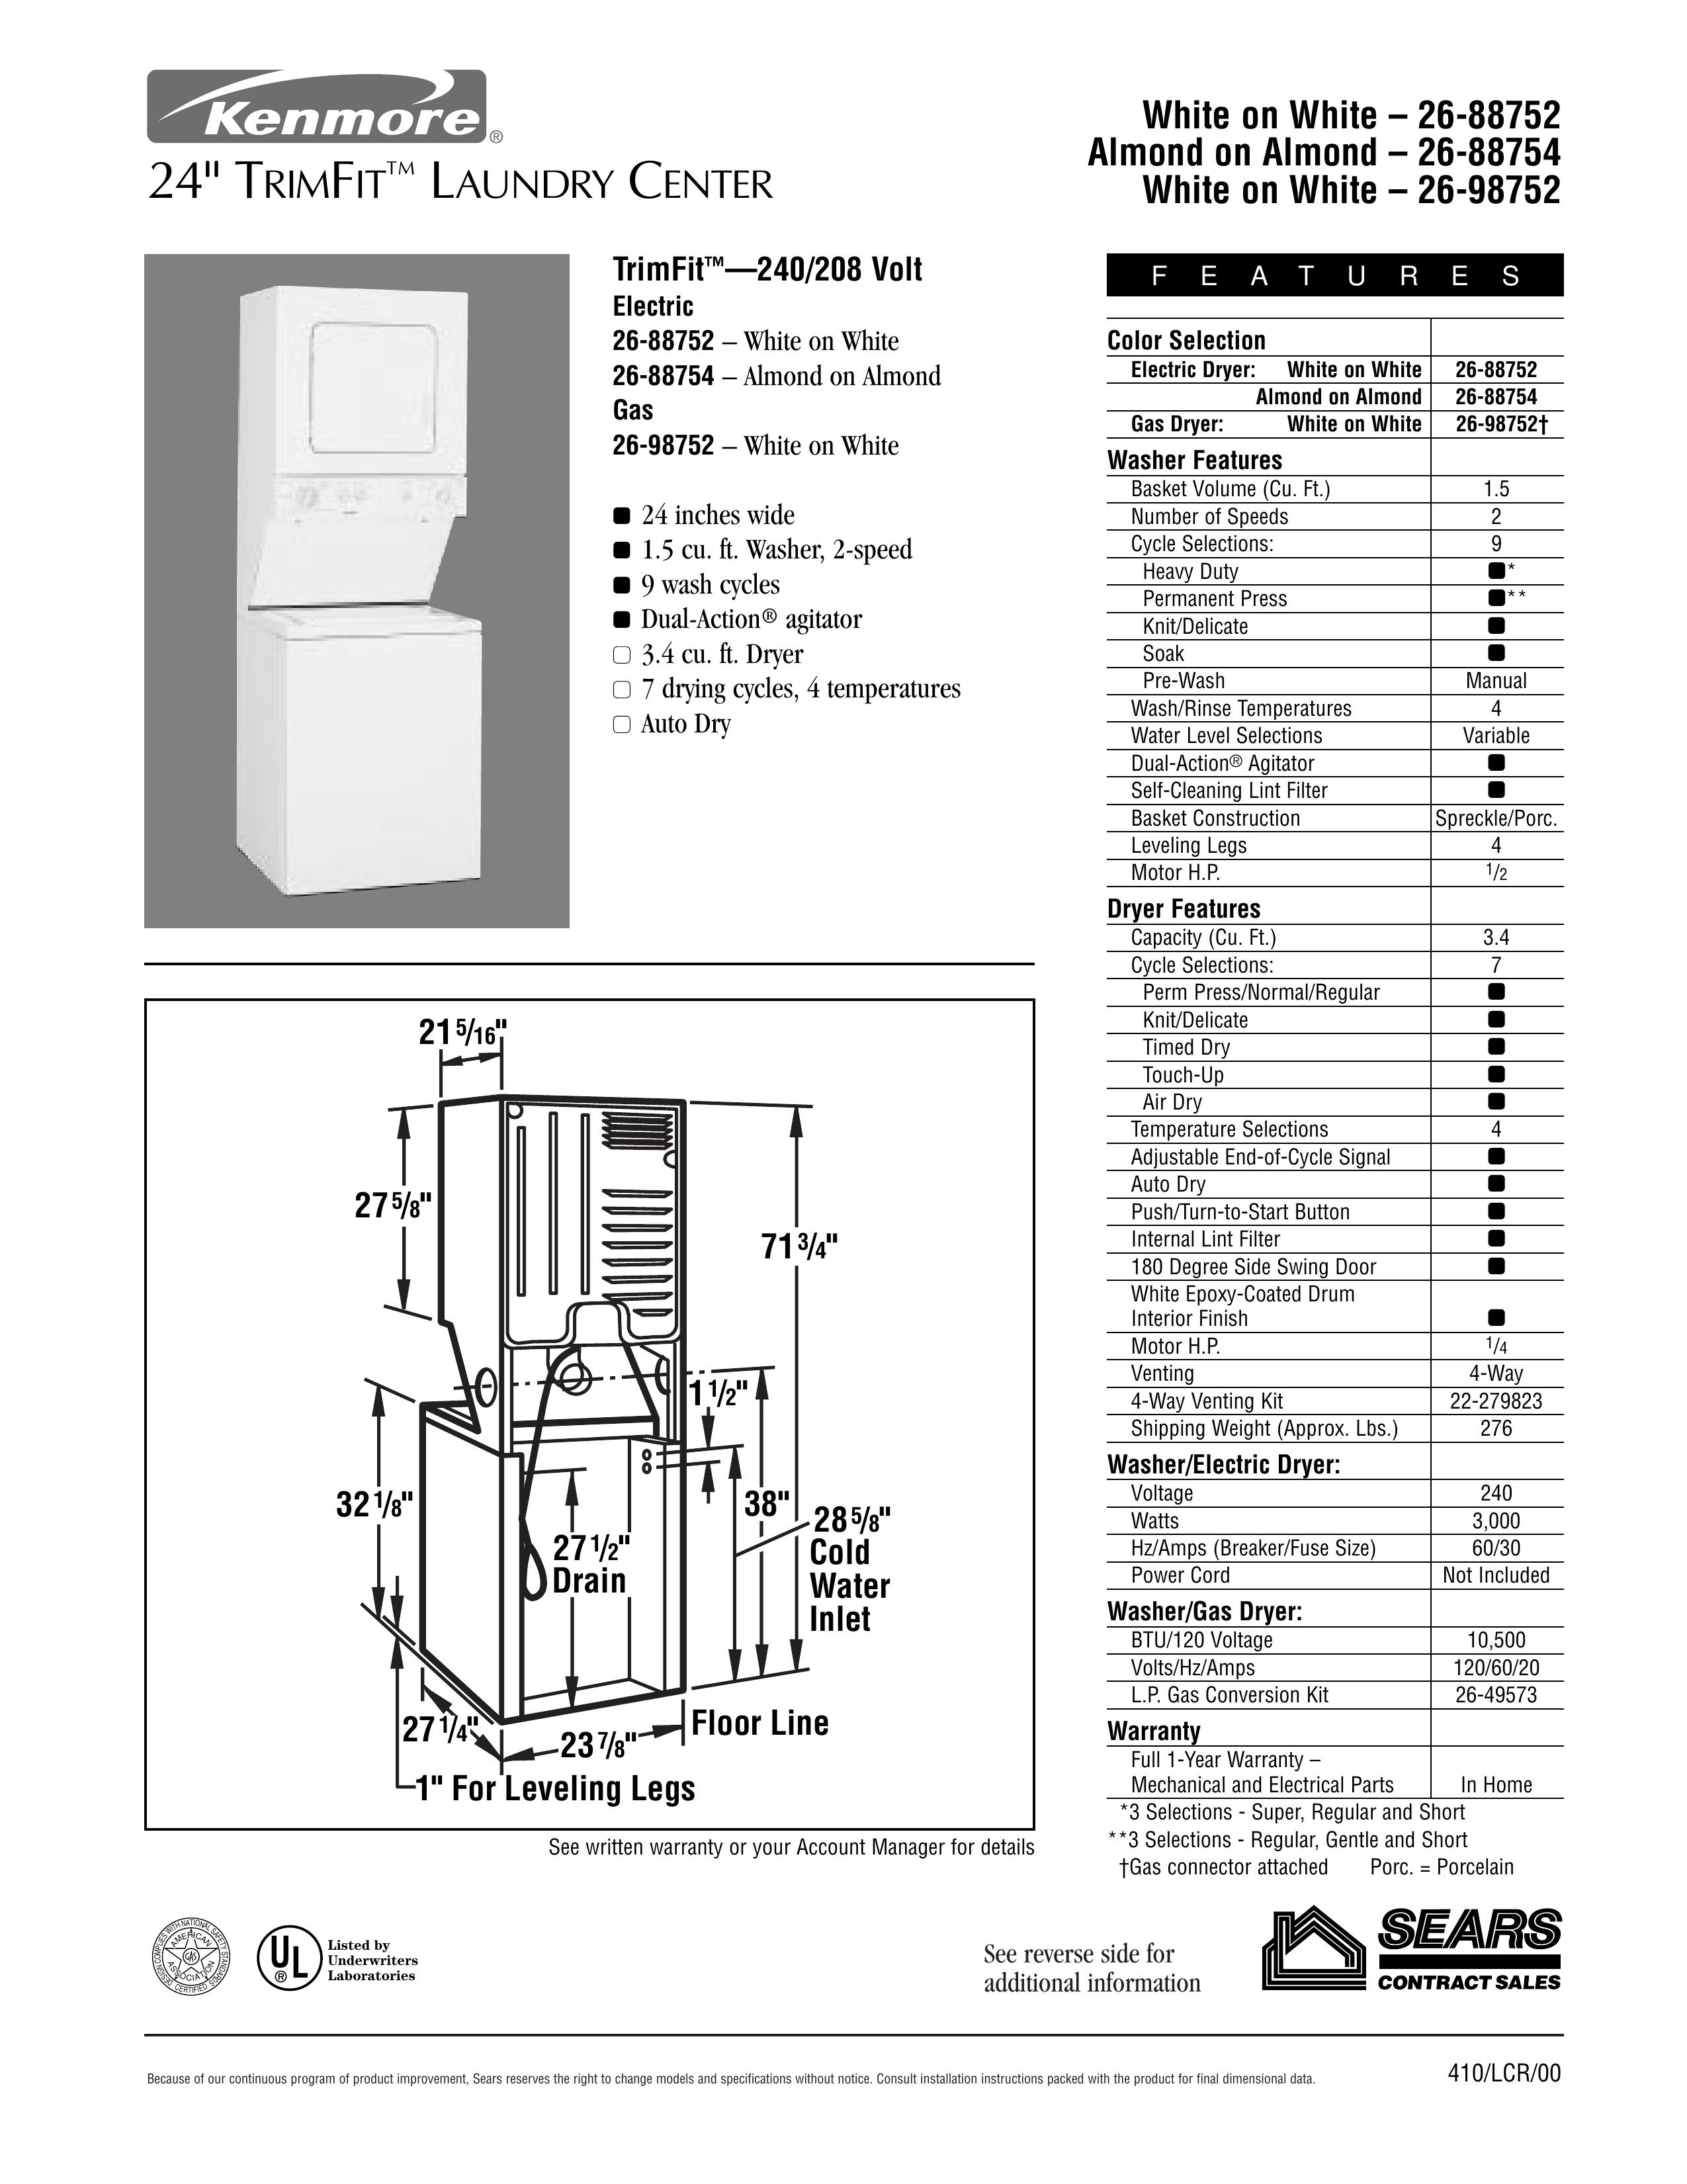 Kenmore 26-88754 Washer/Dryer User Manual